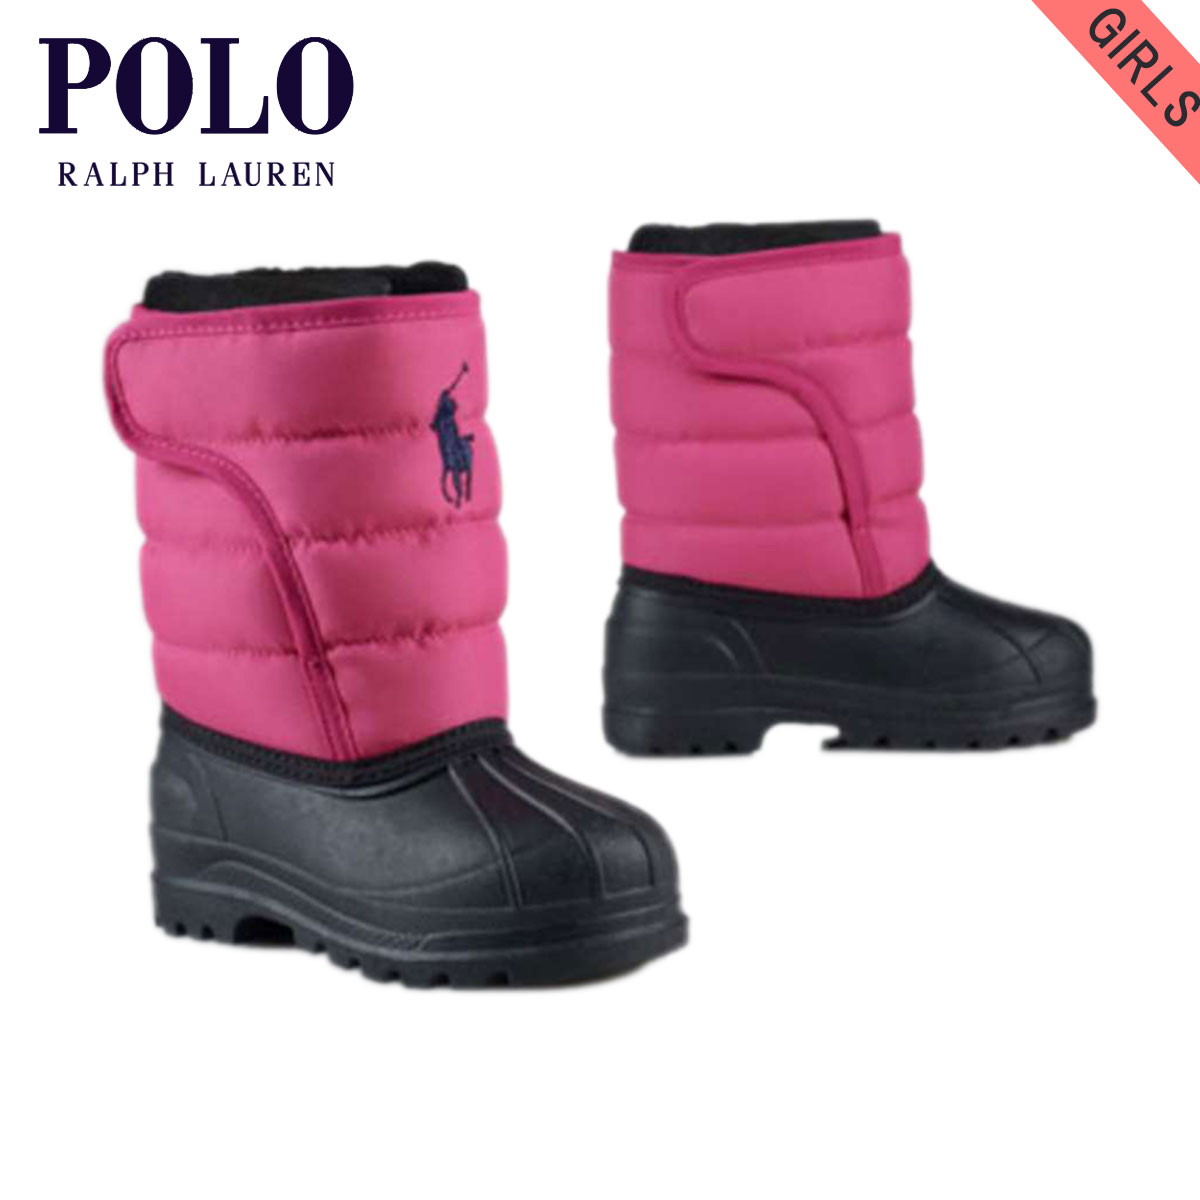 kids polo snow boots